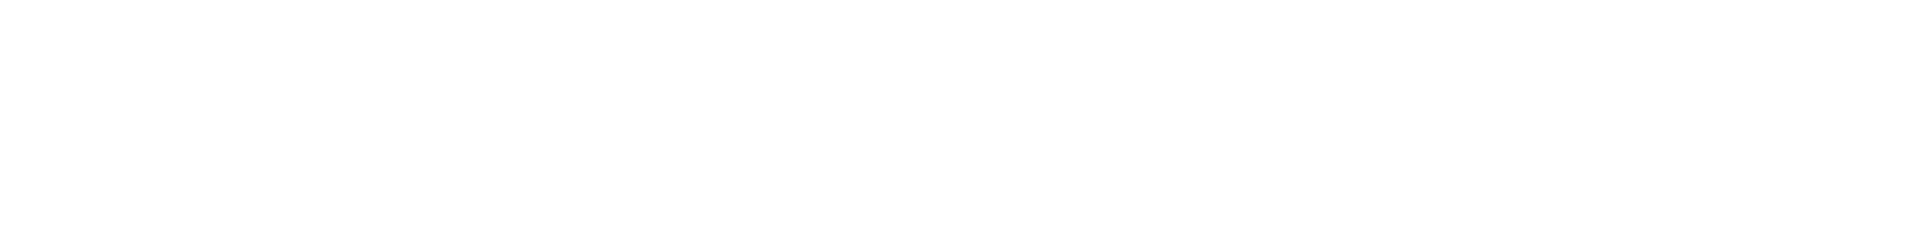 Buzz logo 1920 x 250 (1)